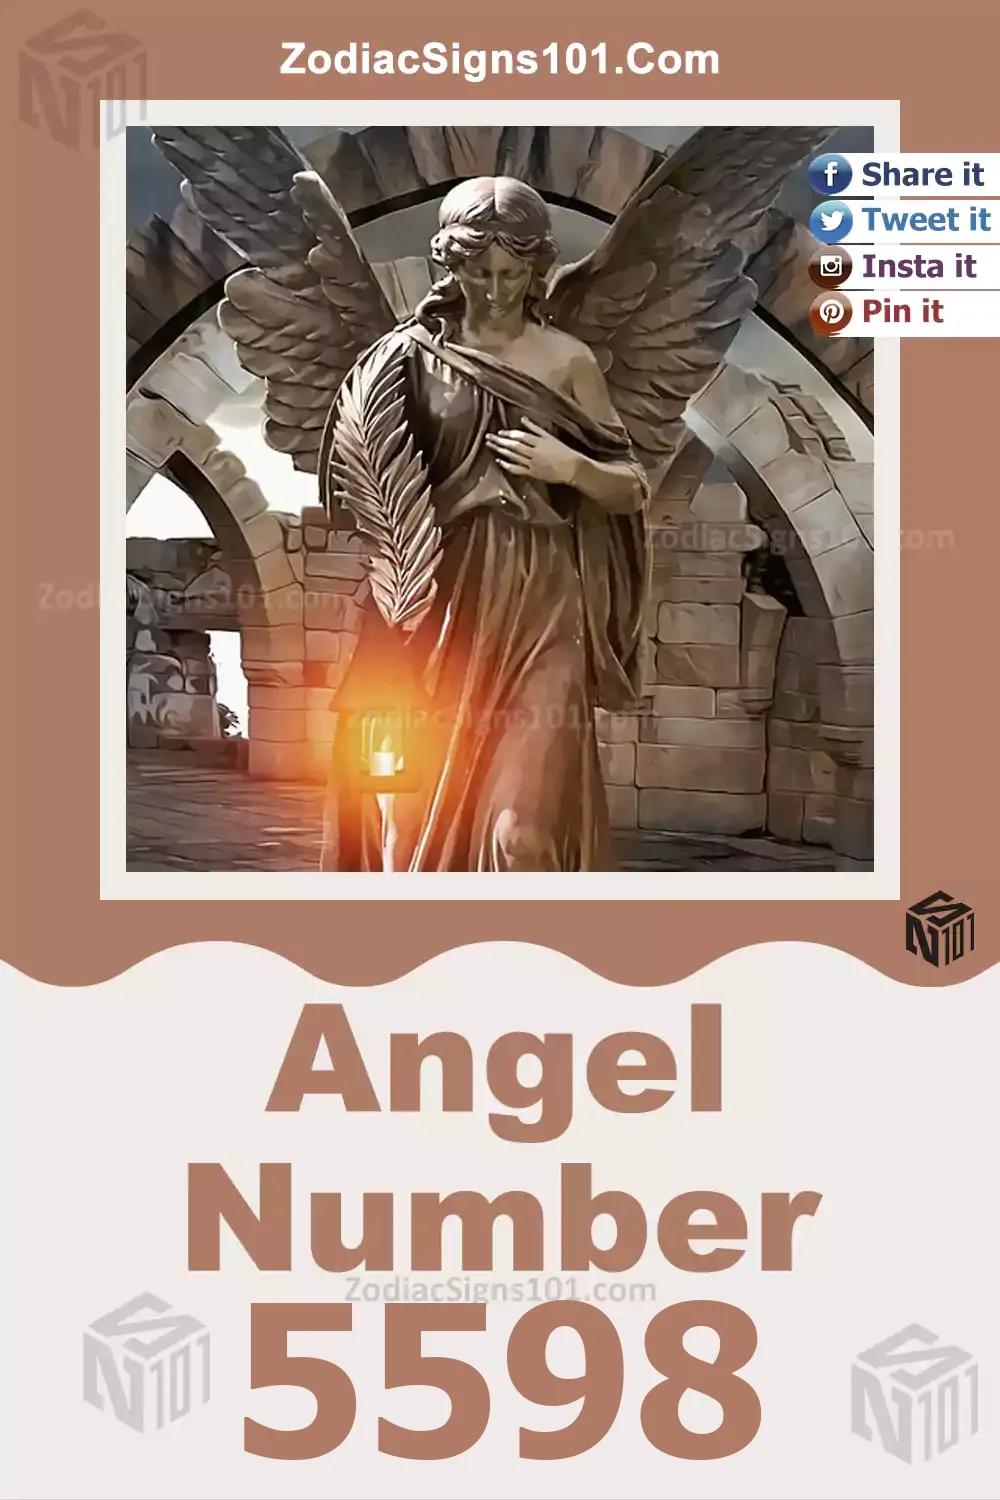 5598-Angel-Number-Meaning.jpg